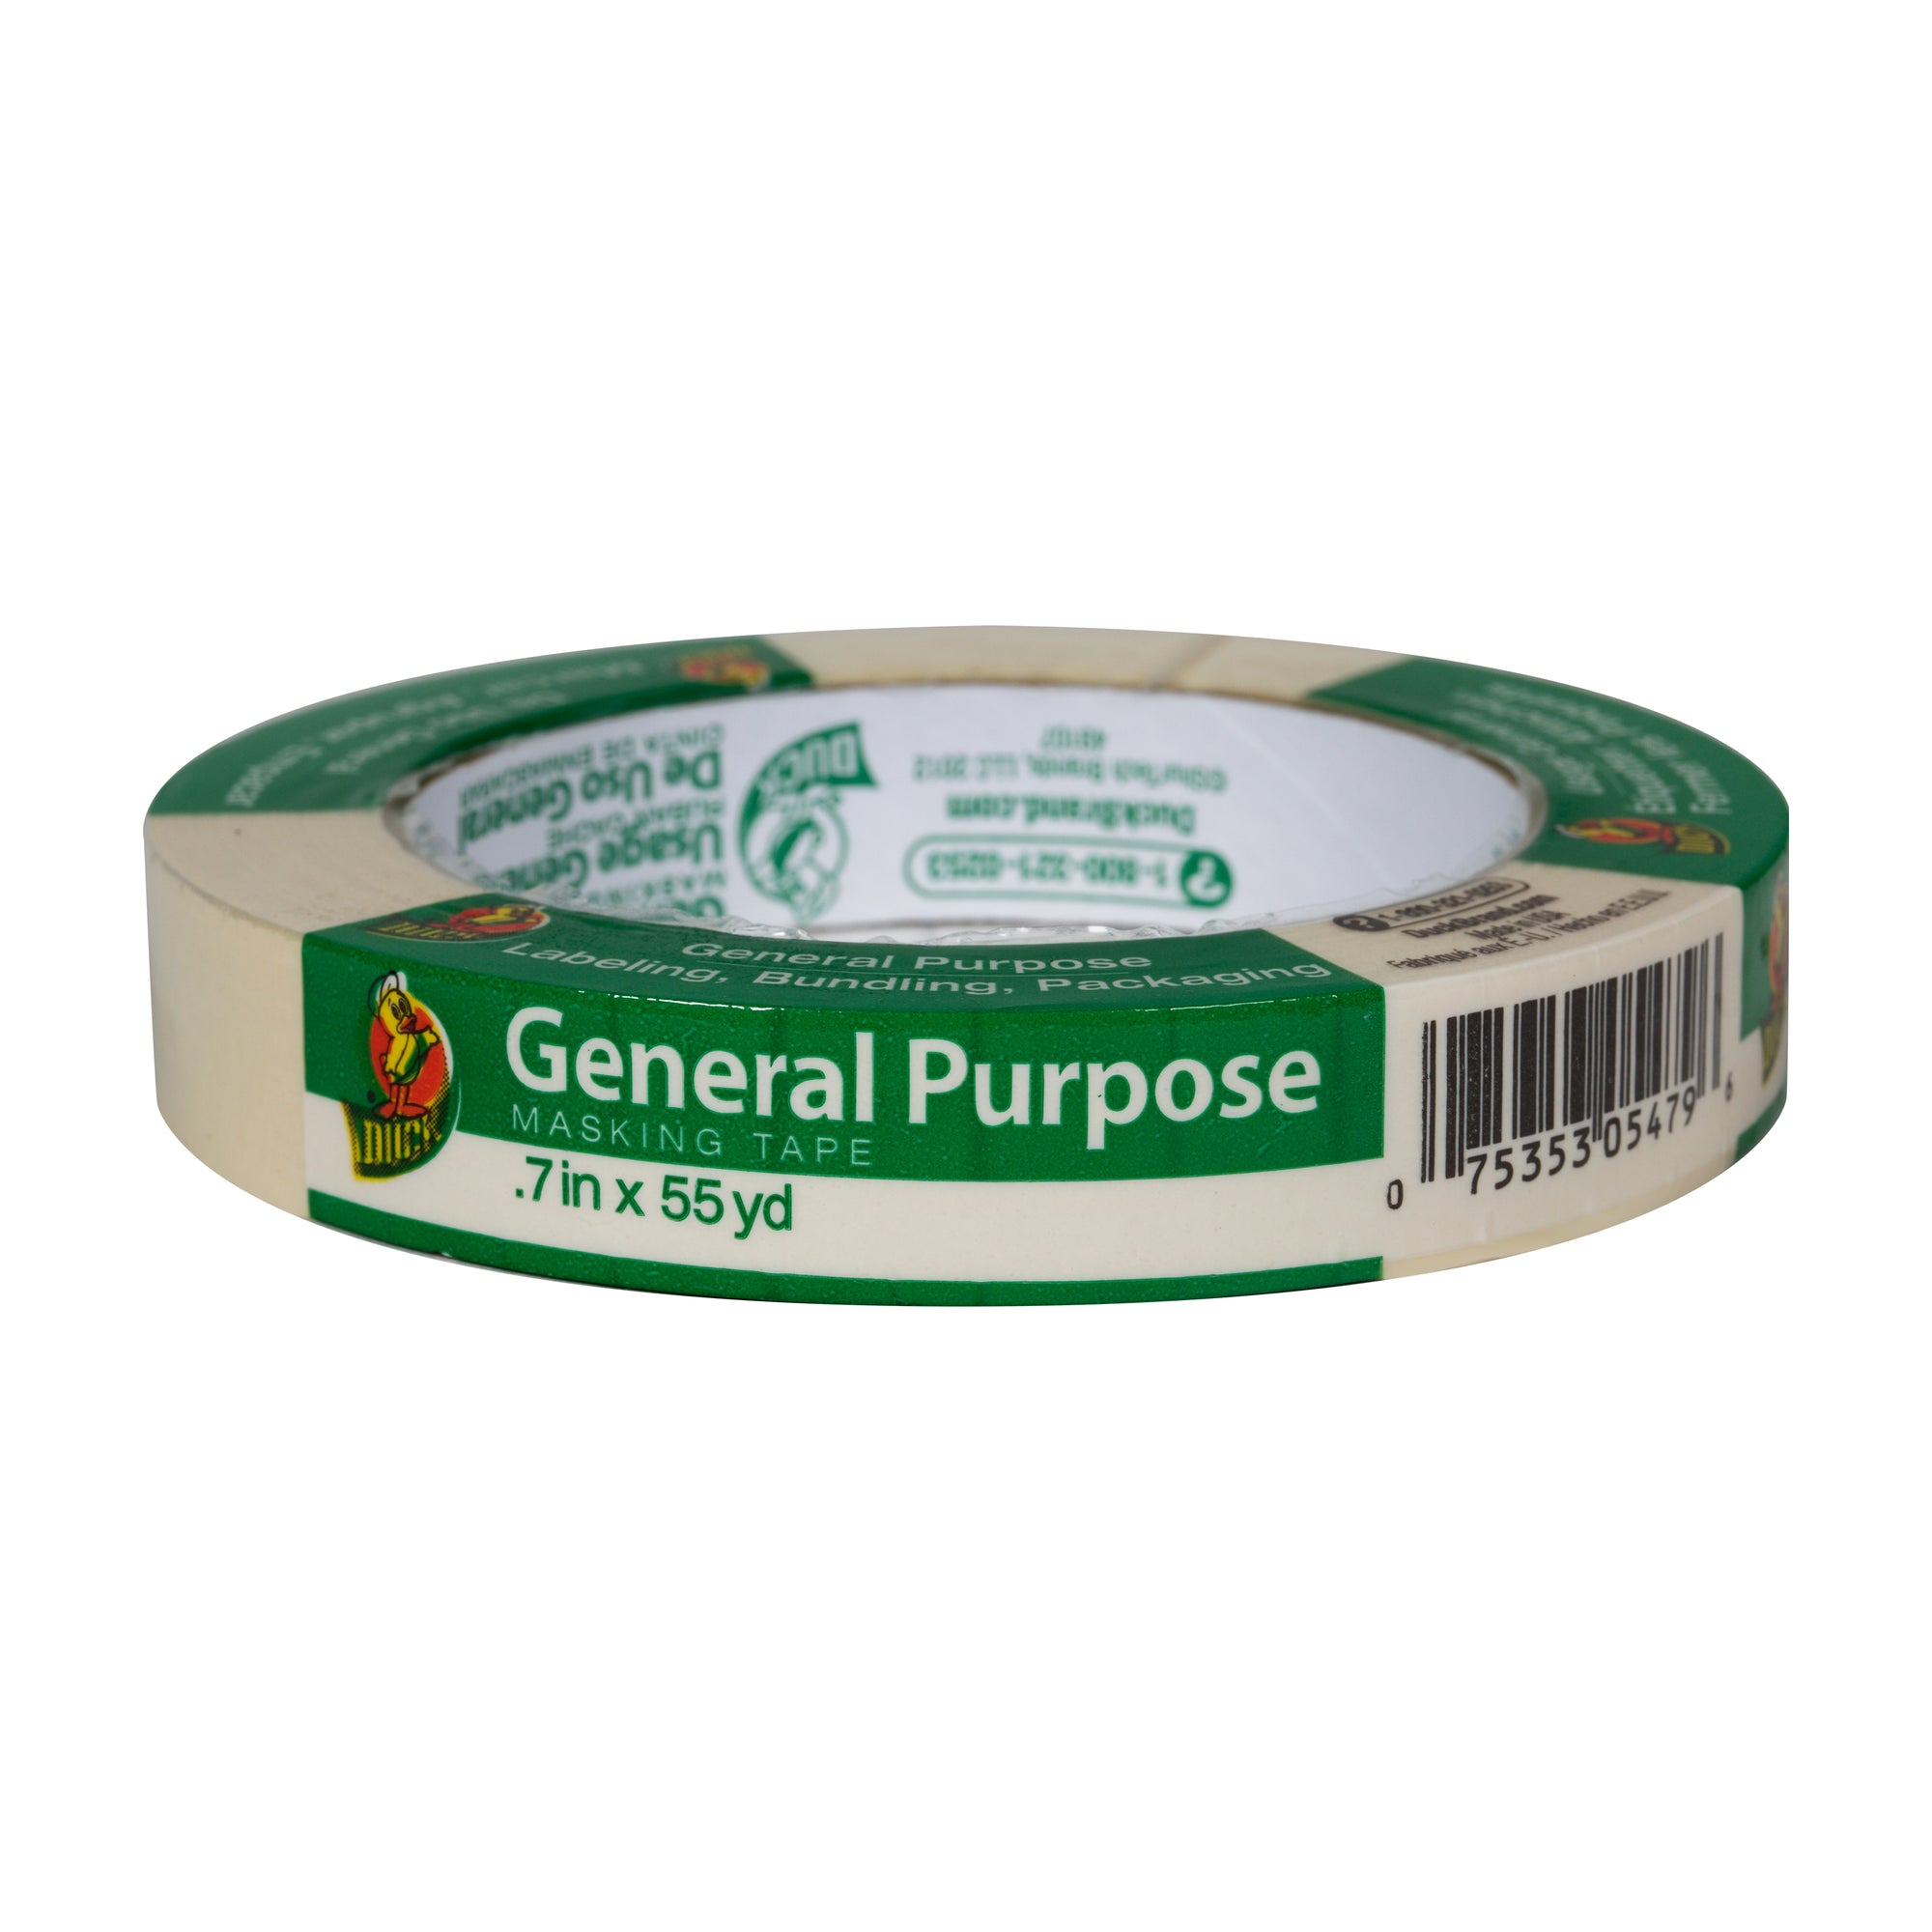 Duck General Purpose Masking Tape 0.7" x 55 Yd